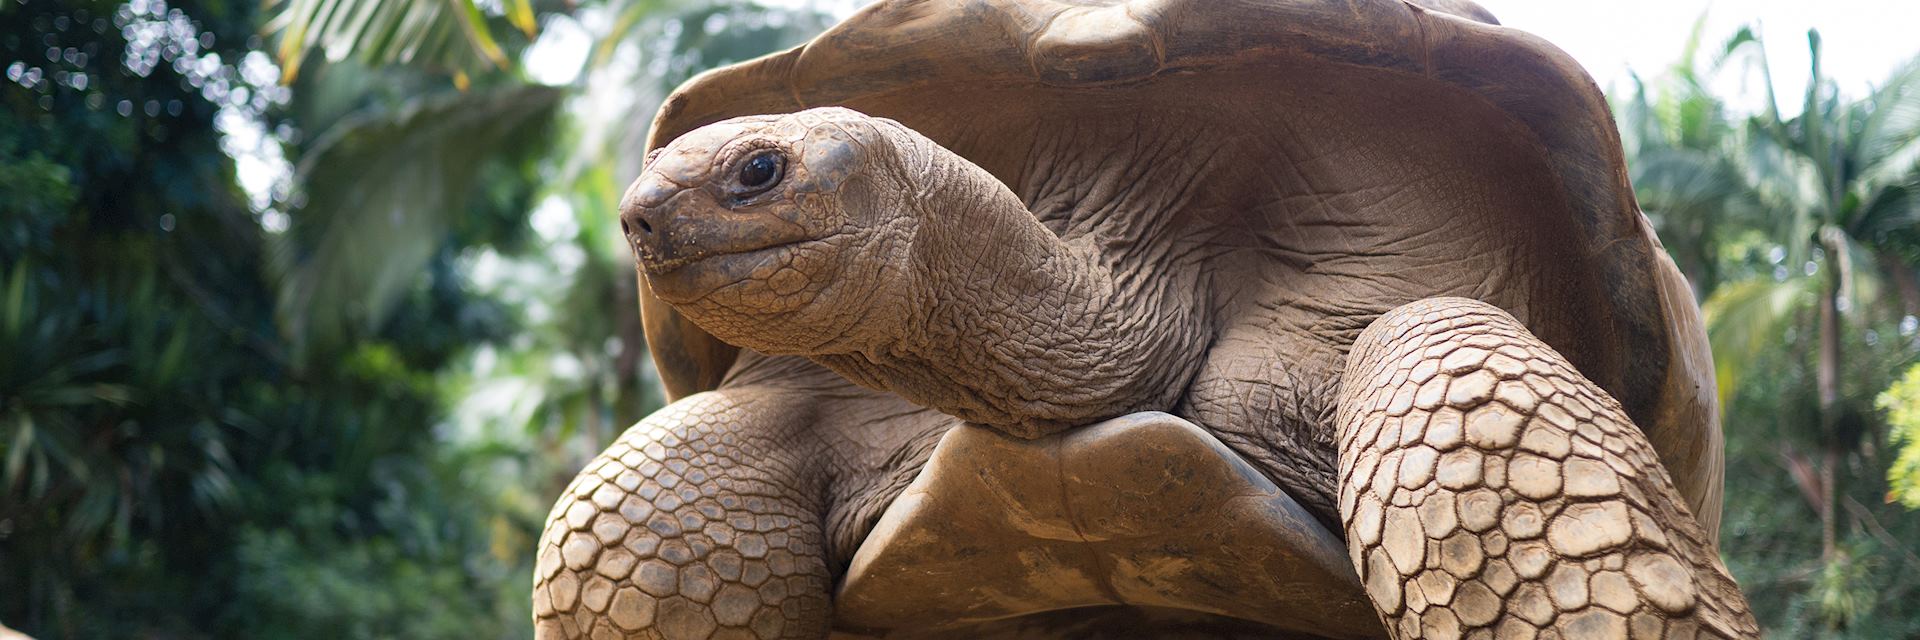 Giant tortoise, Mauritius